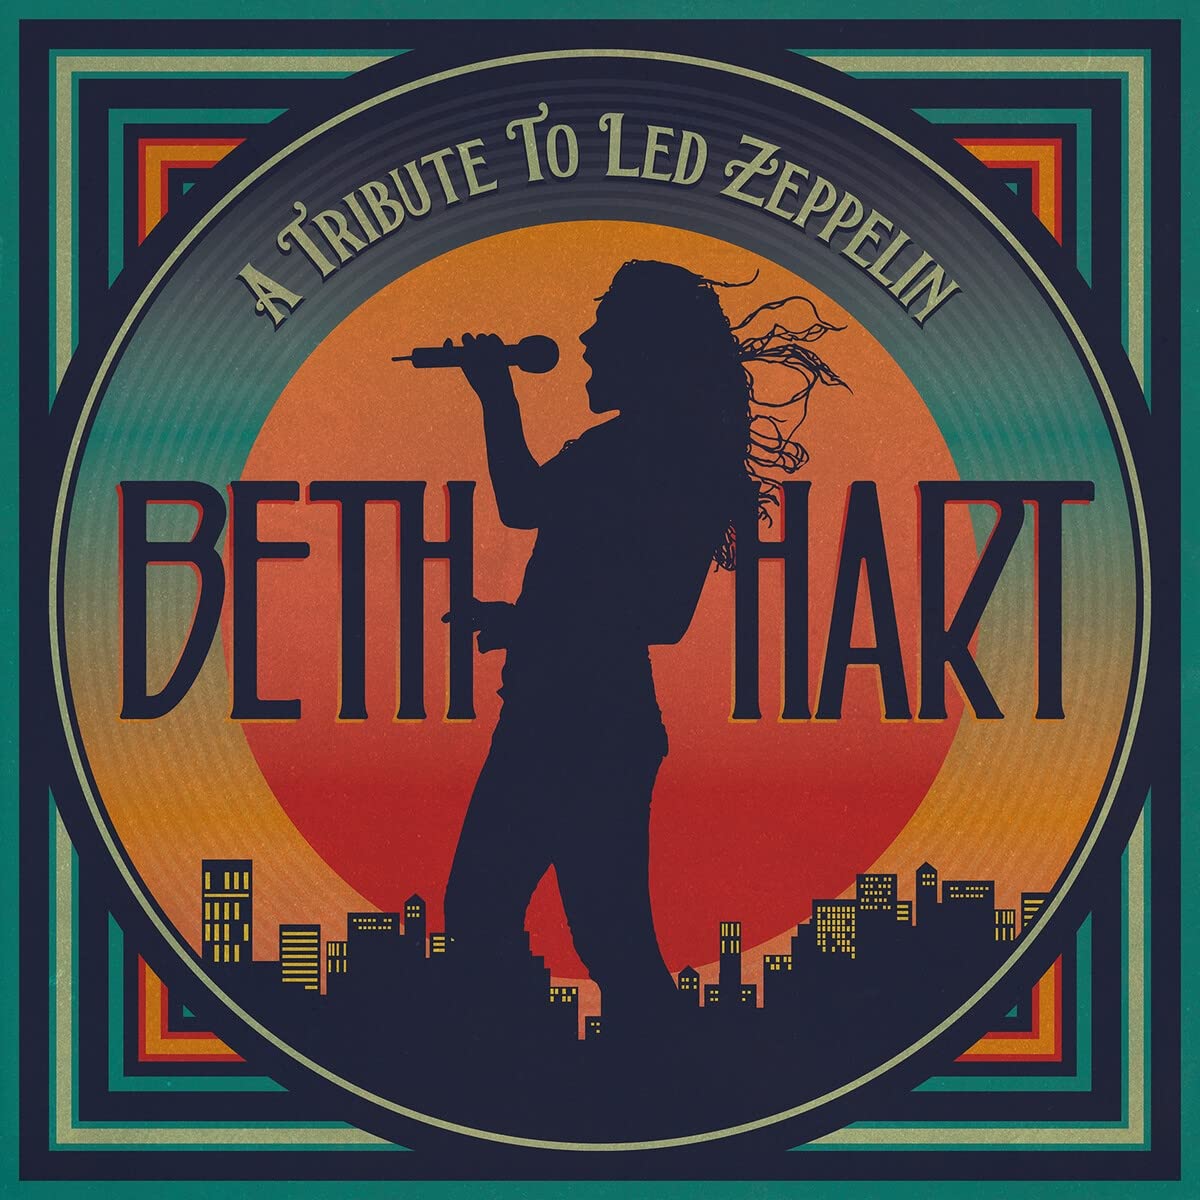 Beth Hart tribute to Led Zeppelin